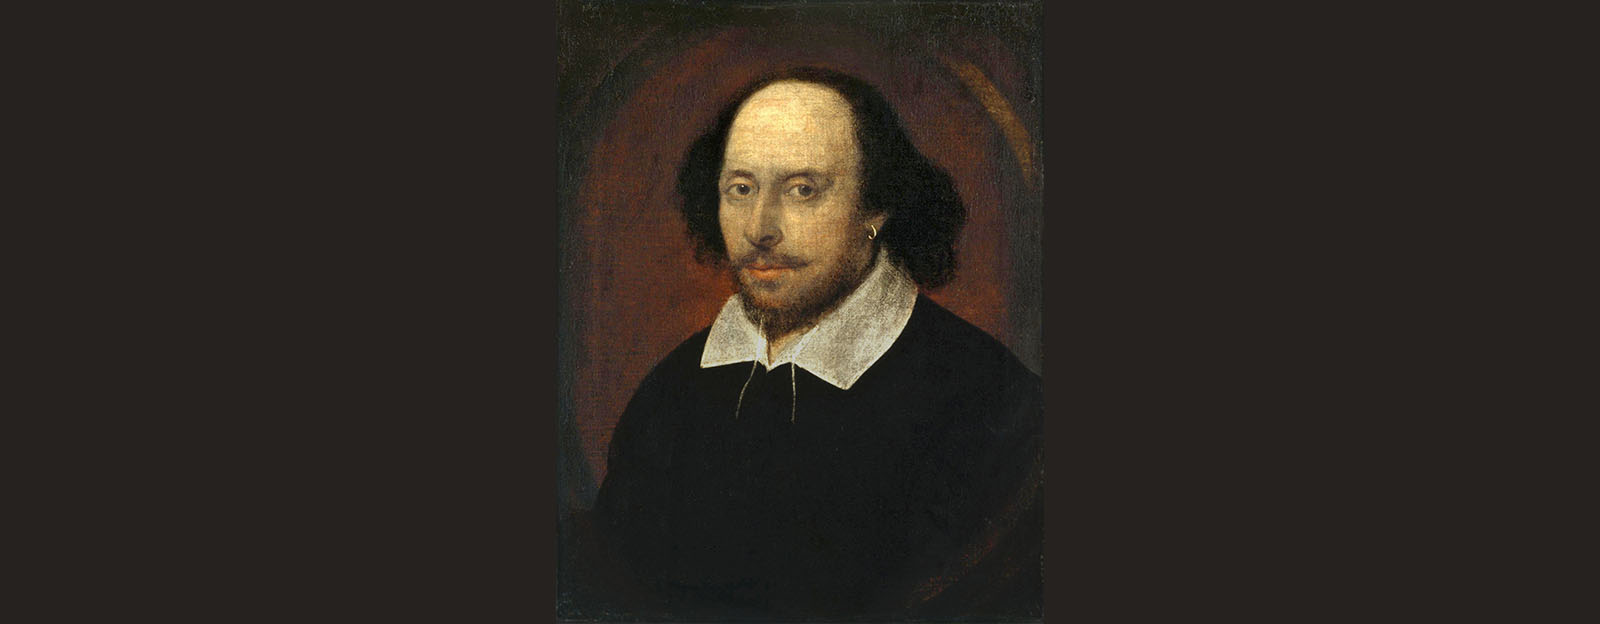 W Shakespeare by John Taylor, wikimedia commons